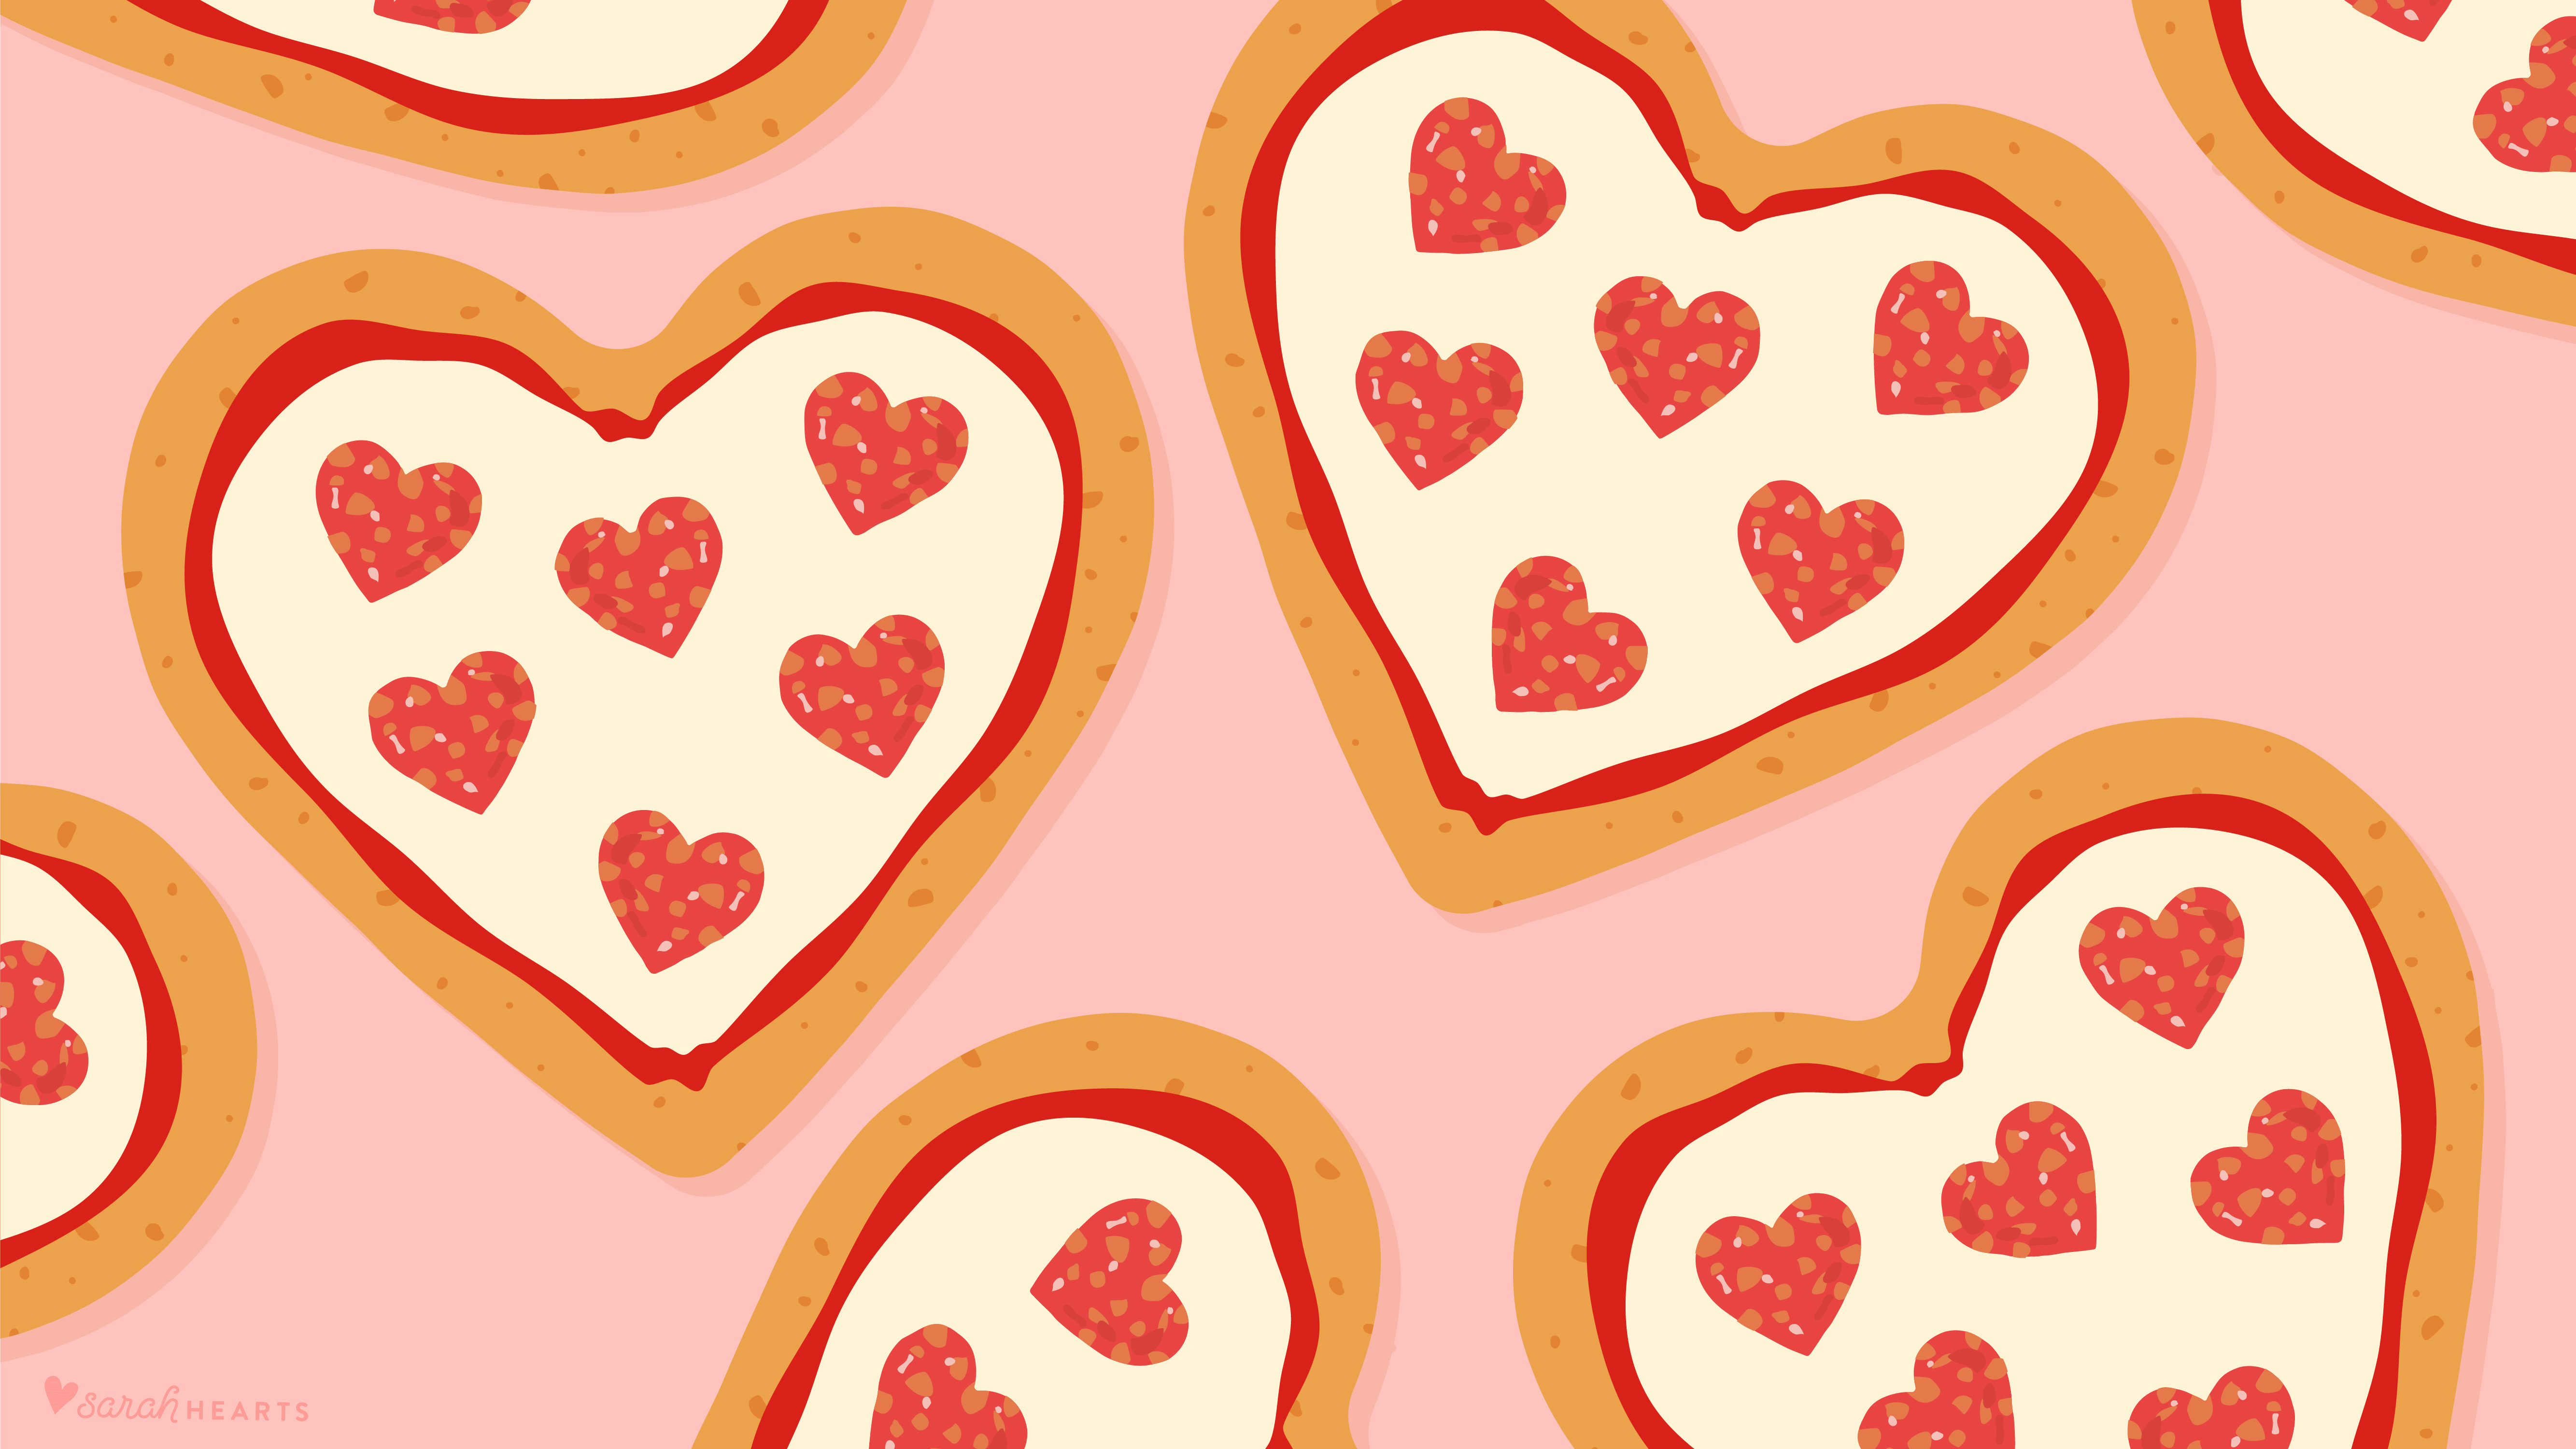 Heart Shaped Pizza February 2018 Calendar Wallpaper - Sarah Hearts